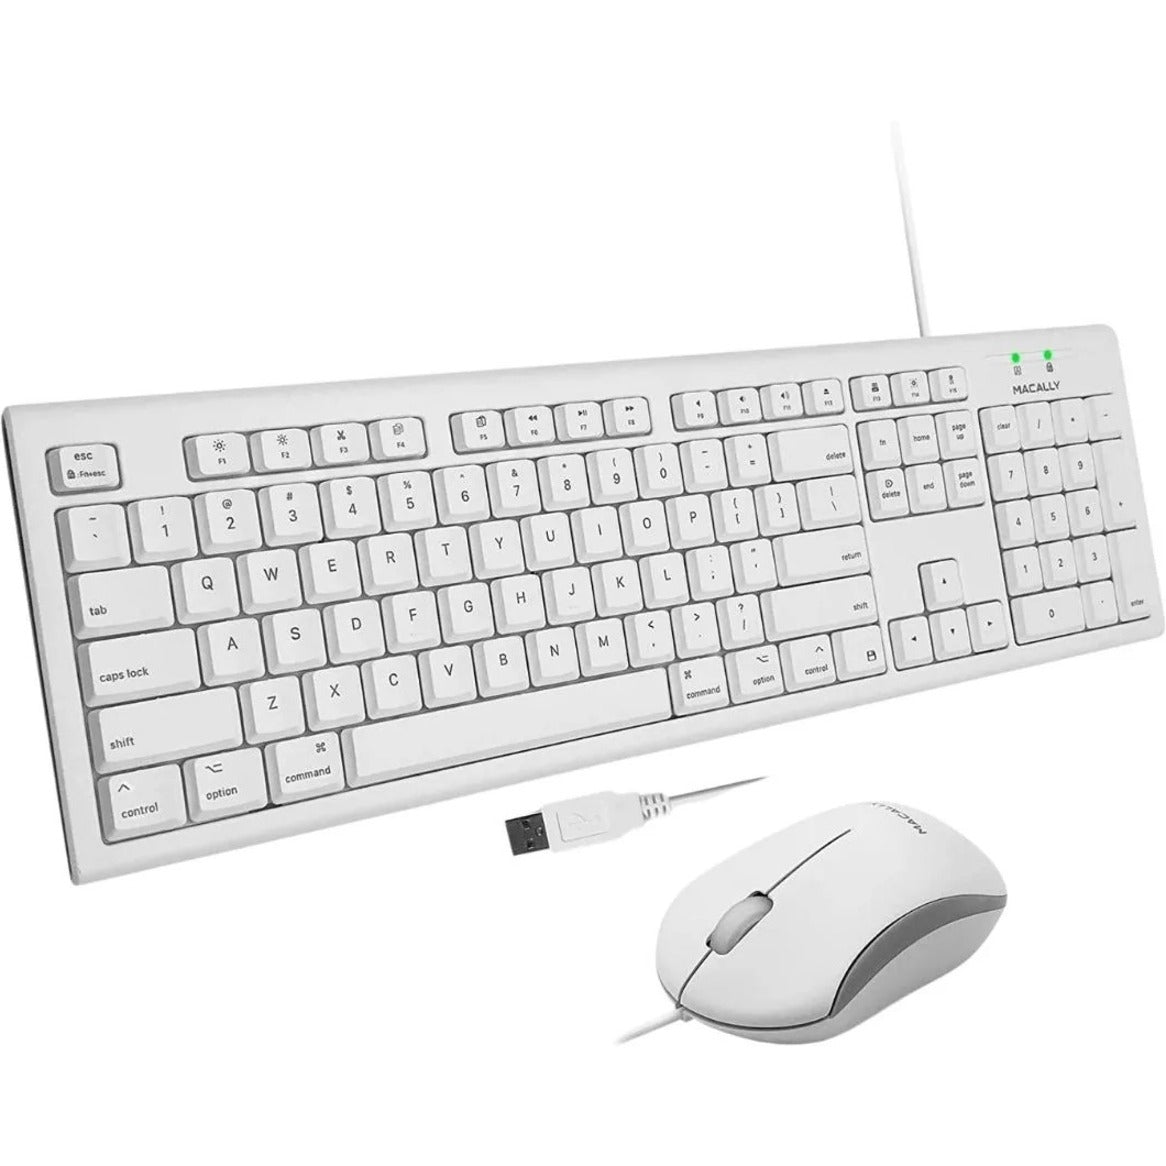 Macally QKEYCOMBO Full Size USB Keyboard and Optical USB Mouse Combo For Mac, Ergonomic Fit, Scroll Wheel, 1200 dpi